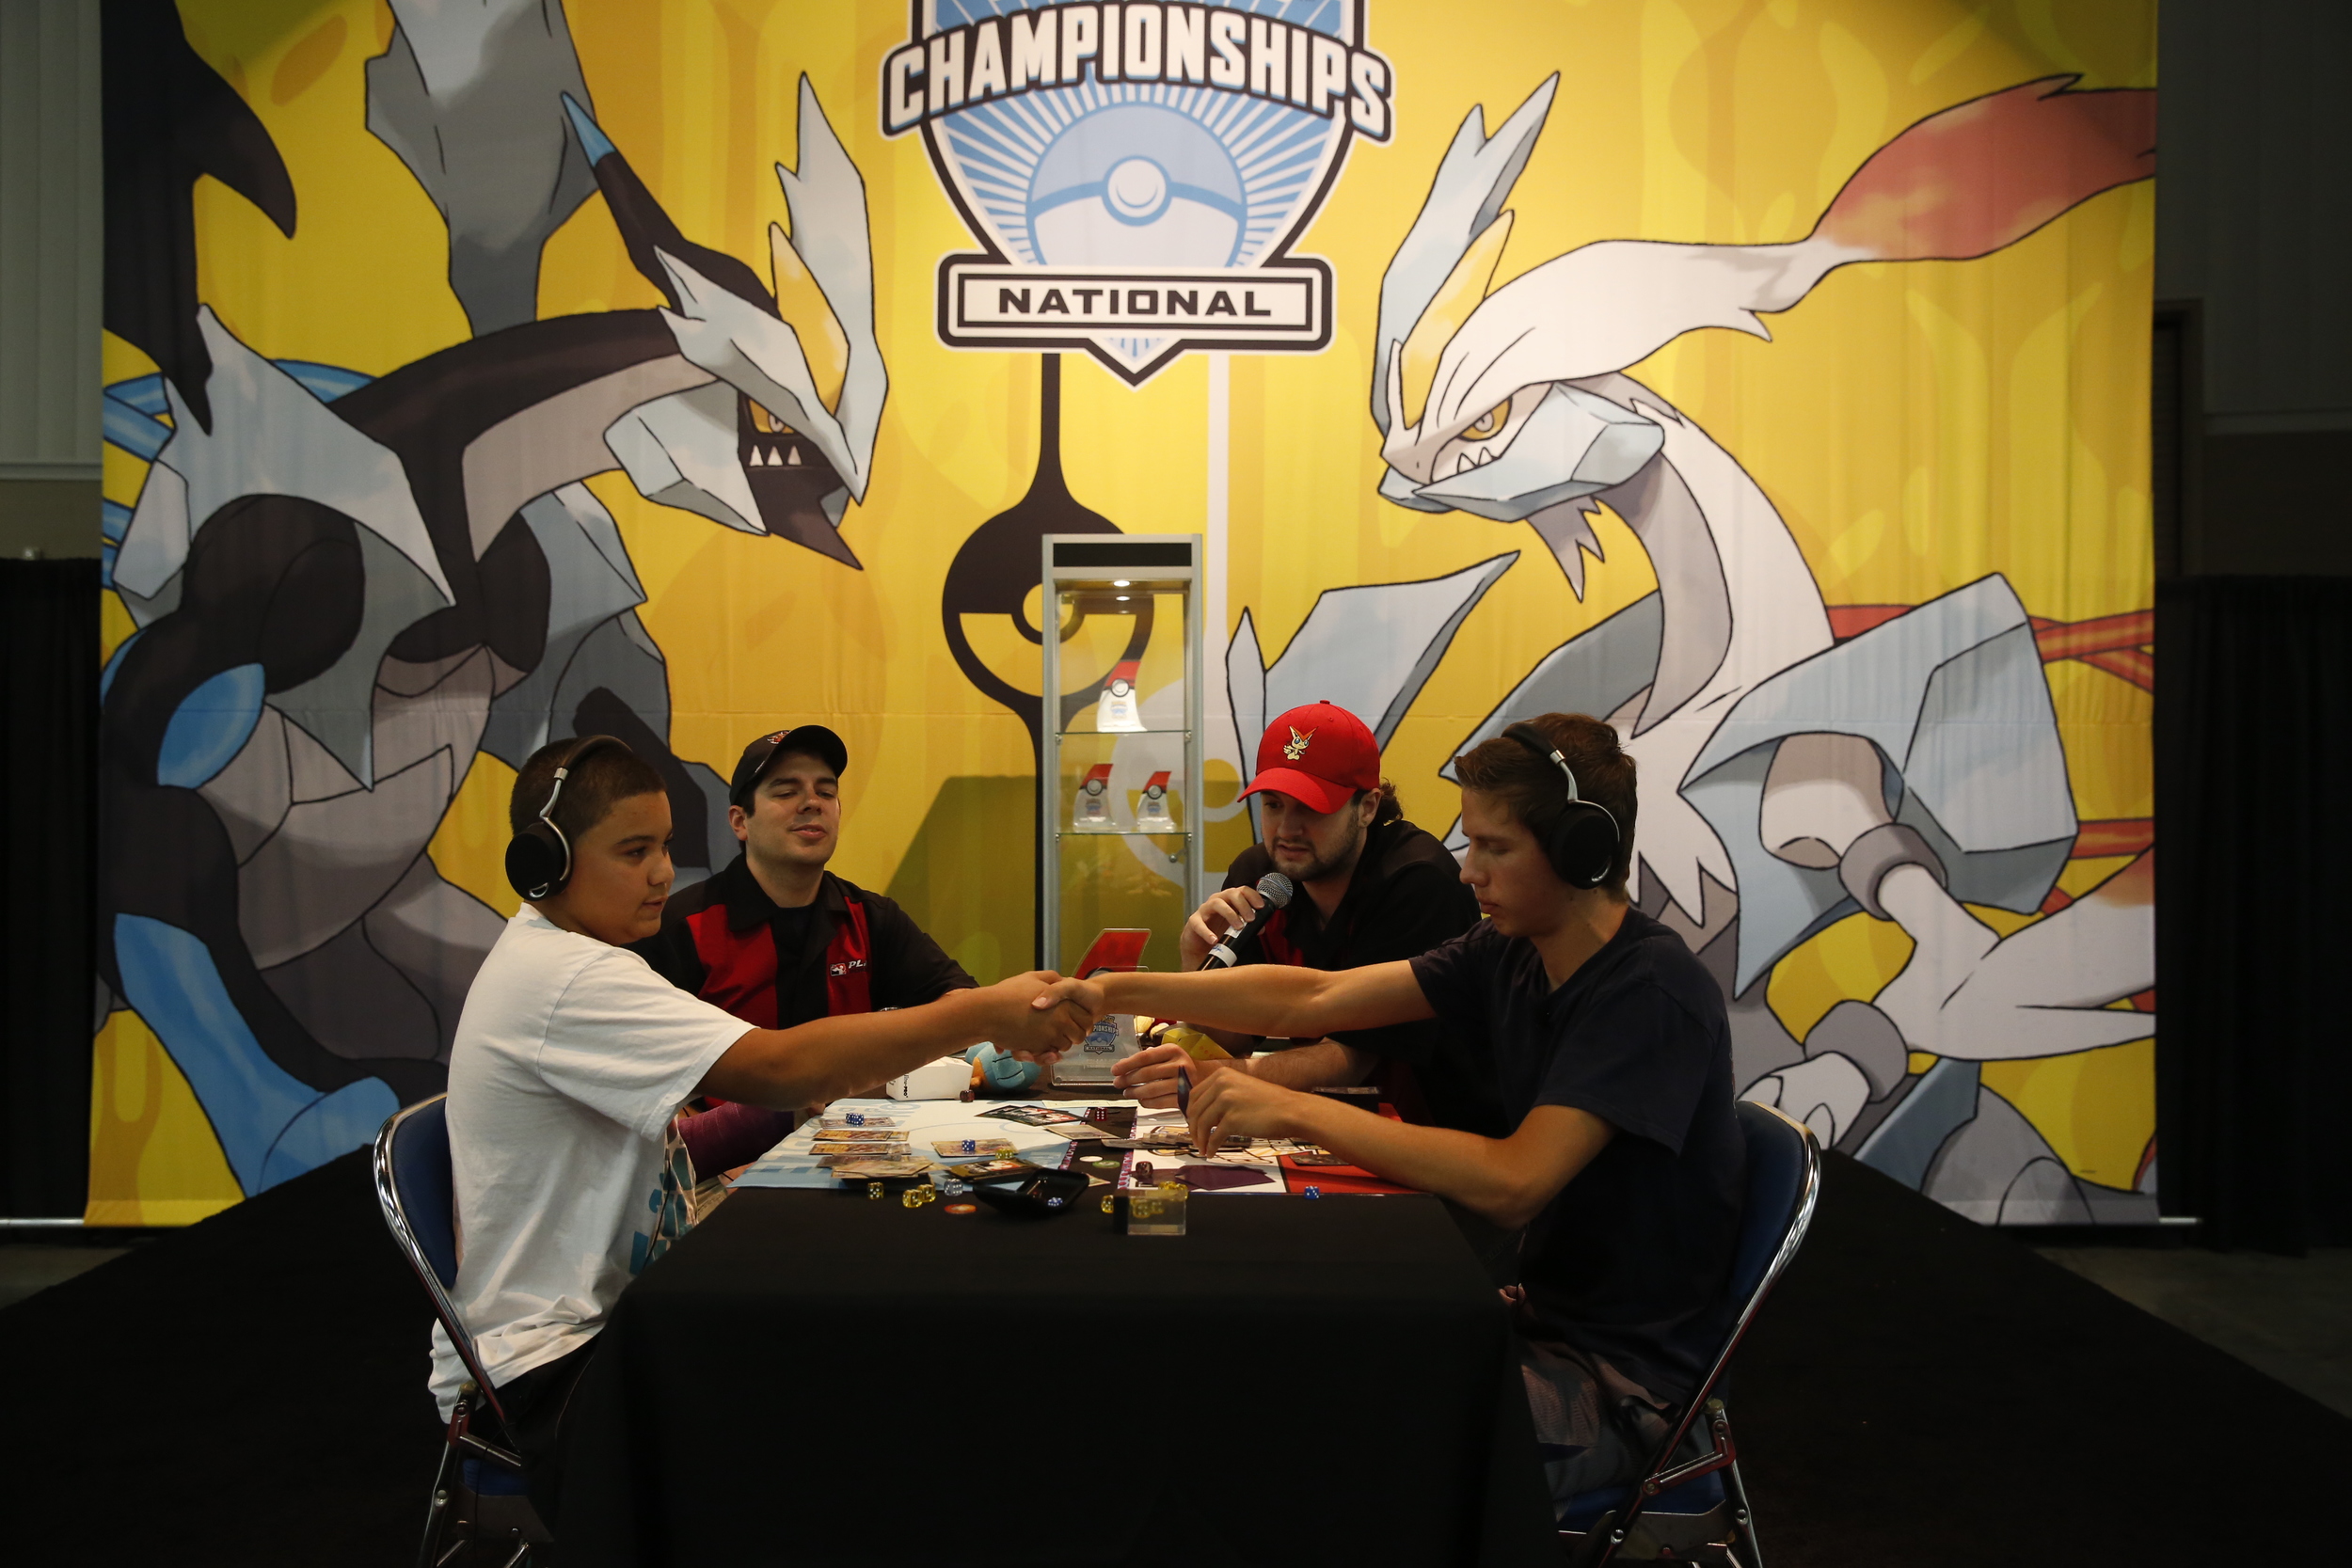 2013 U.S. Pokémon National Championships Image 12.JPG